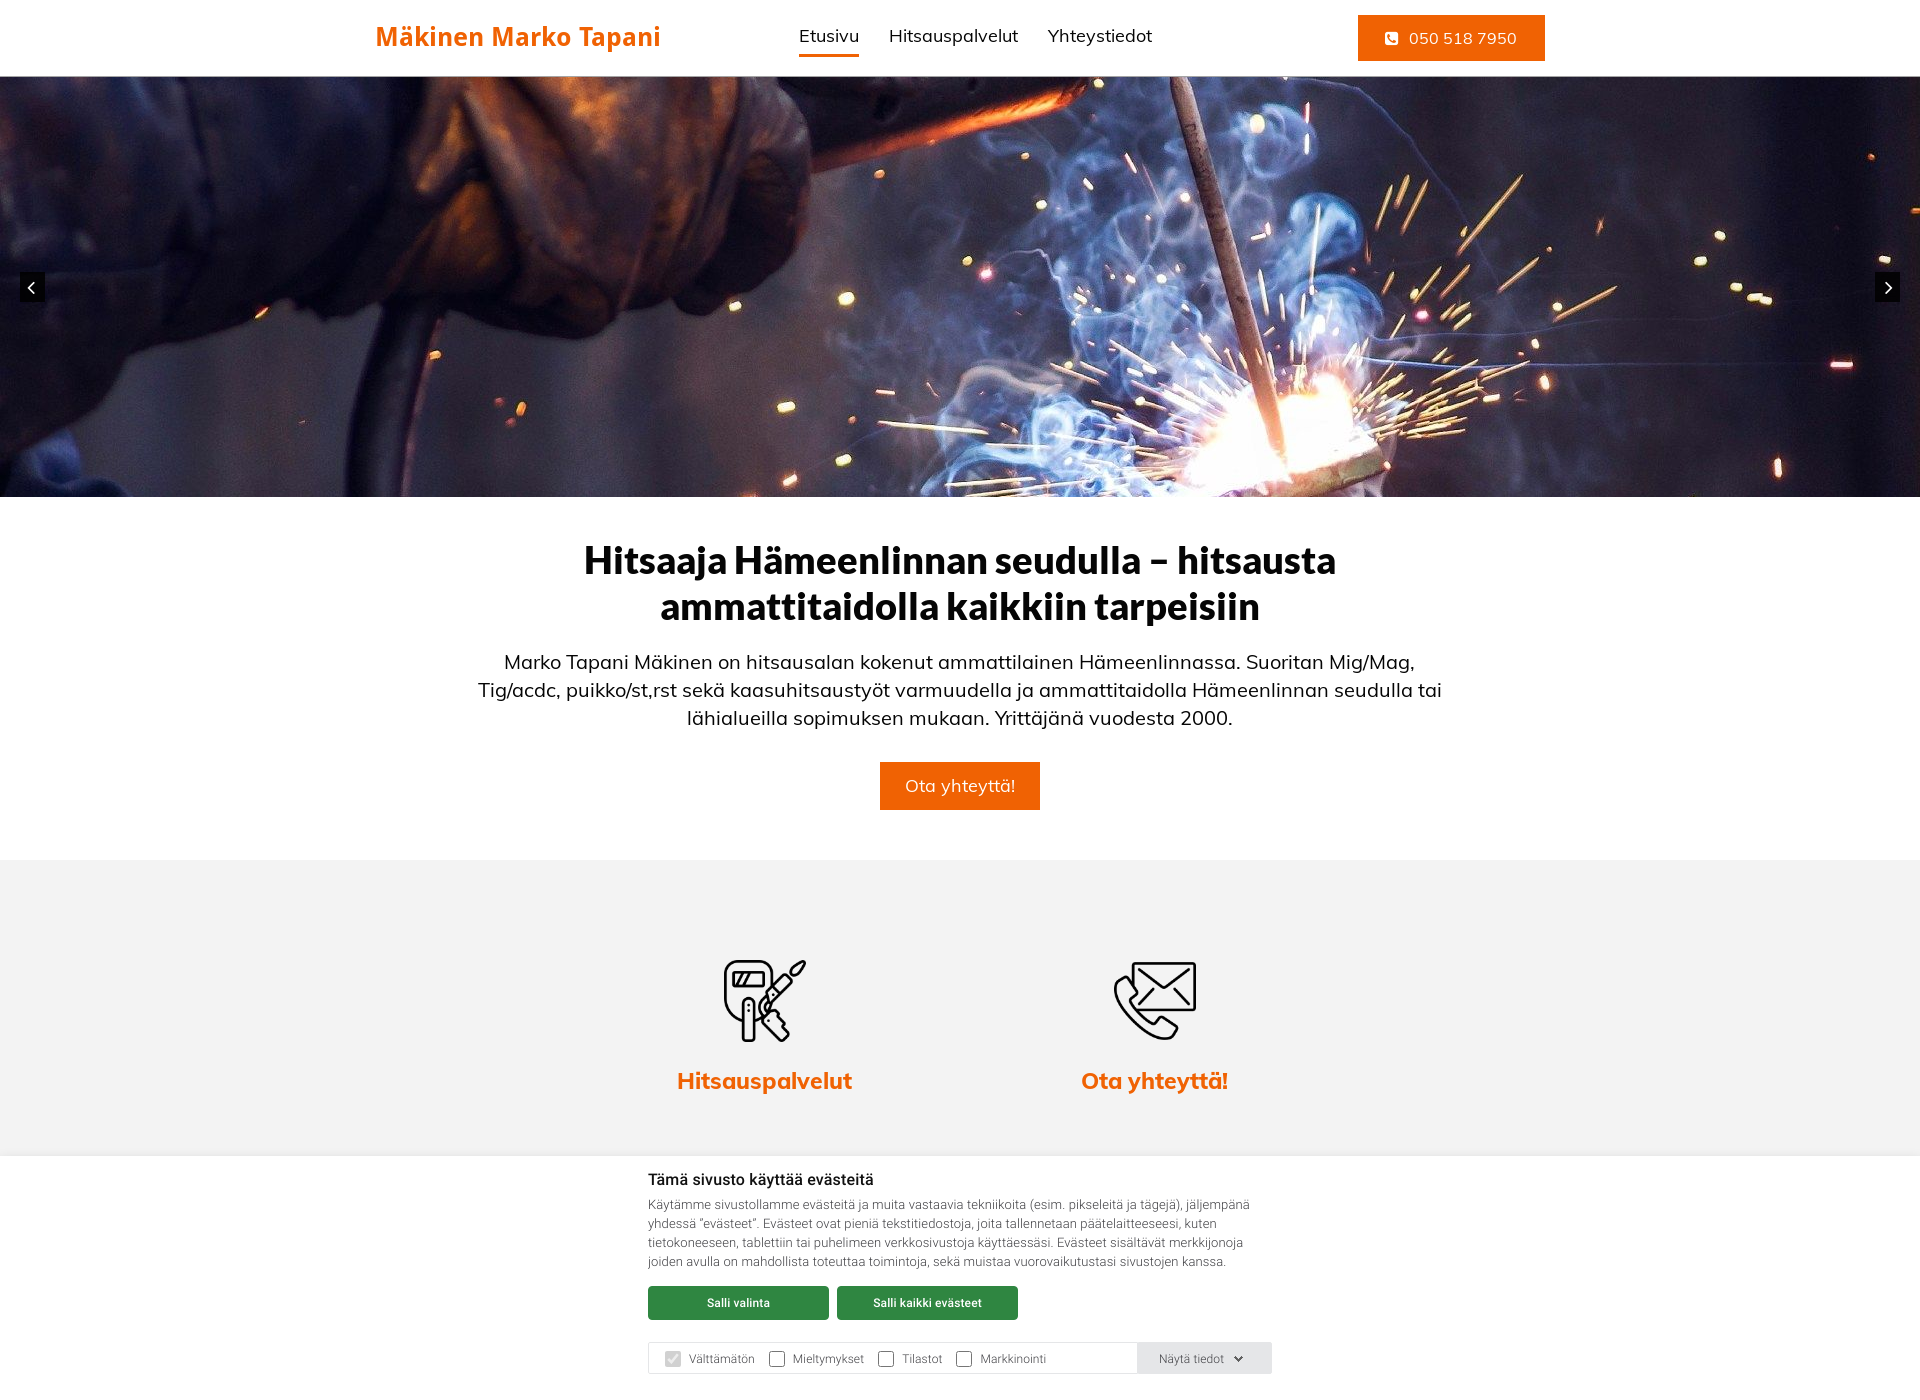 Screenshot for metallityothameenlinna.fi